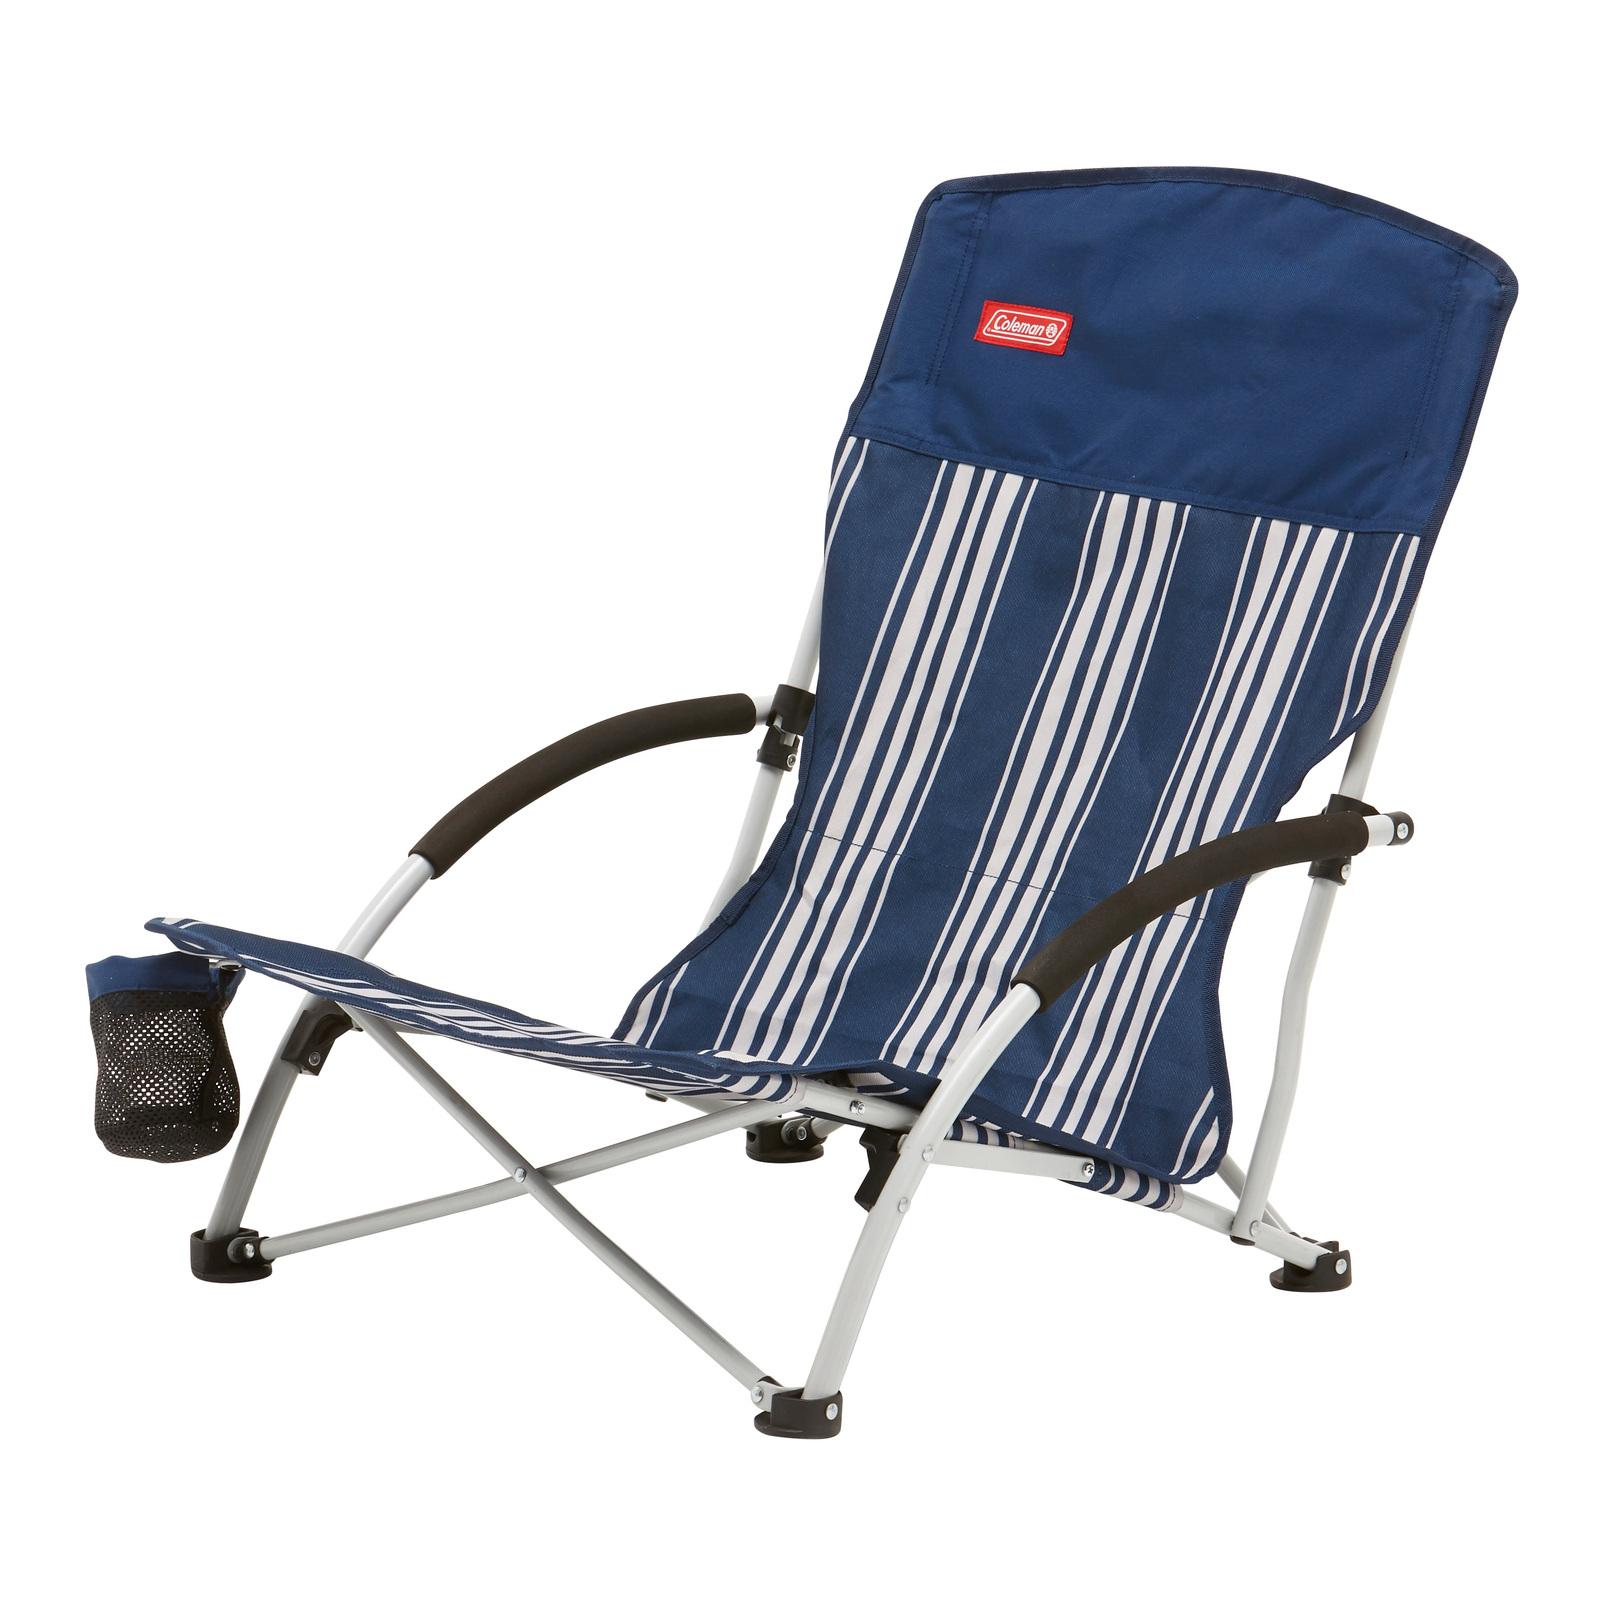 Modern Coleman Beach Chair for Simple Design